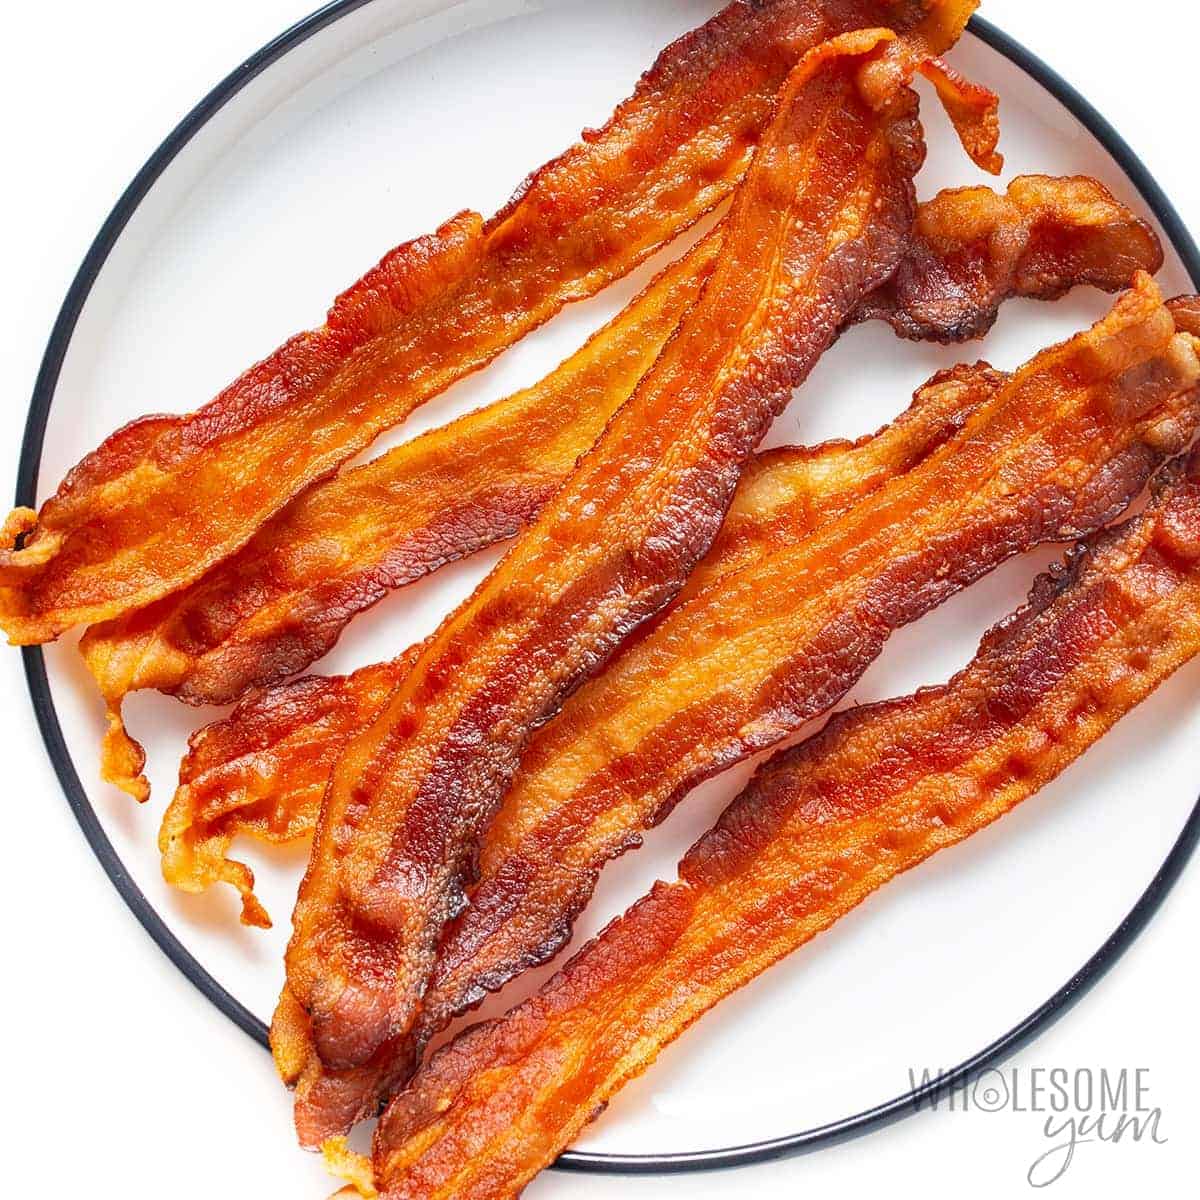 Crispy microwave bacon slices on a plate